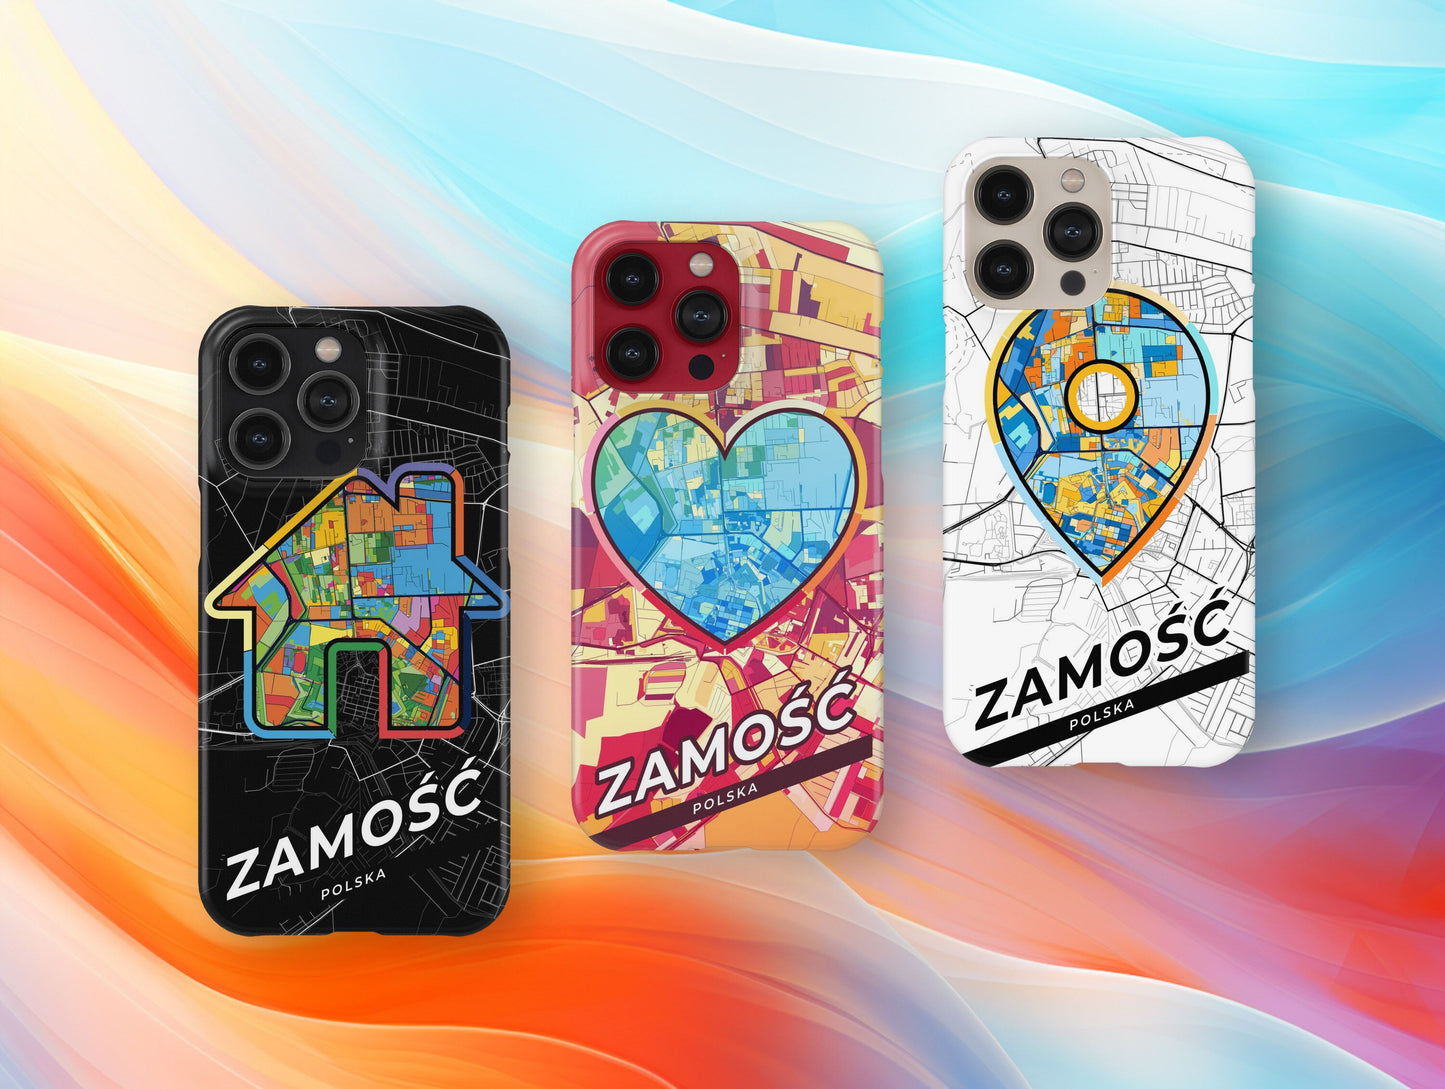 Zamość Poland slim phone case with colorful icon